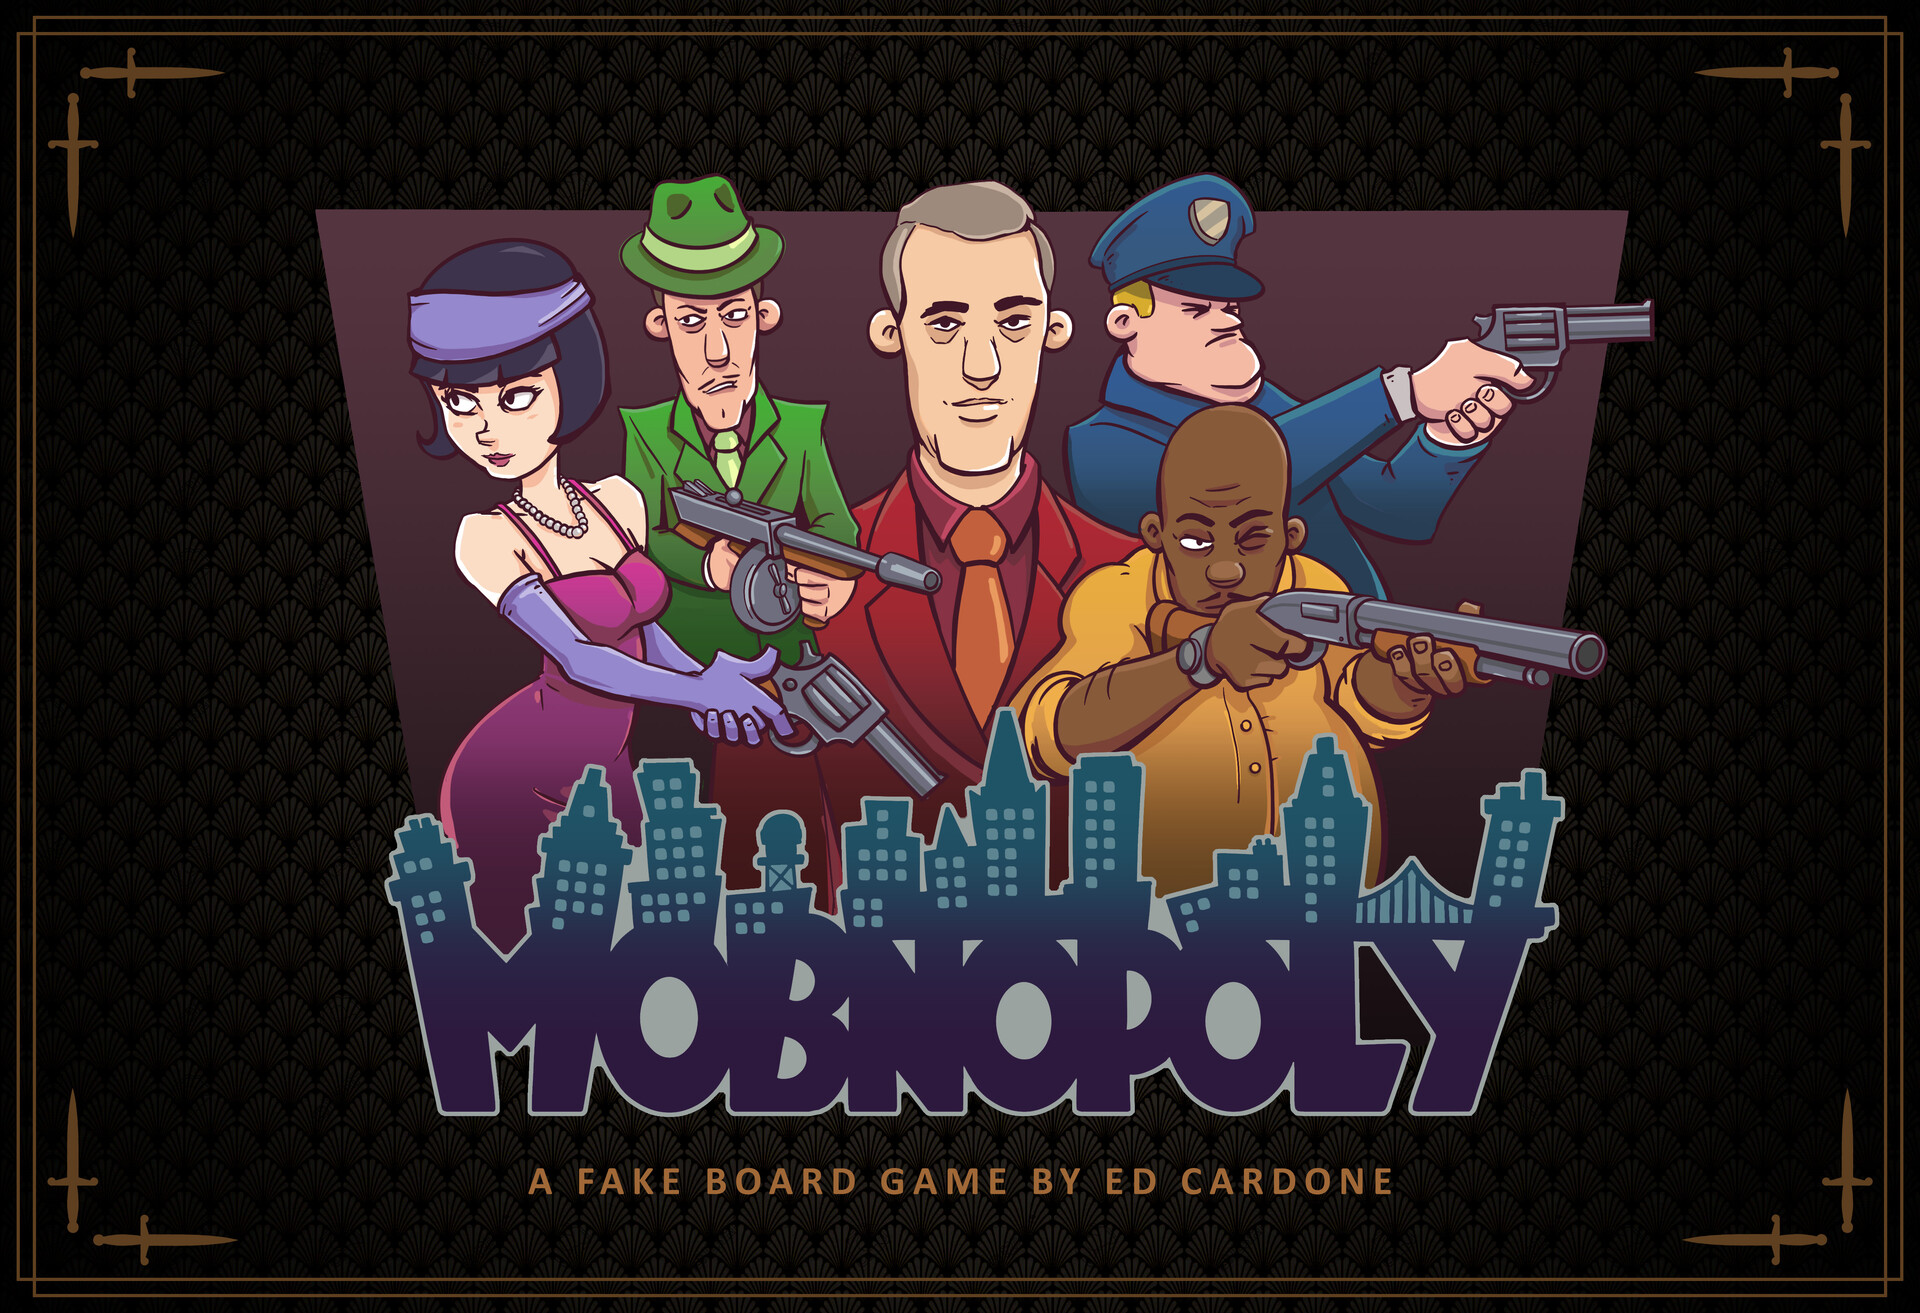 Ed Cardone - Mobnopoly - A fake board game